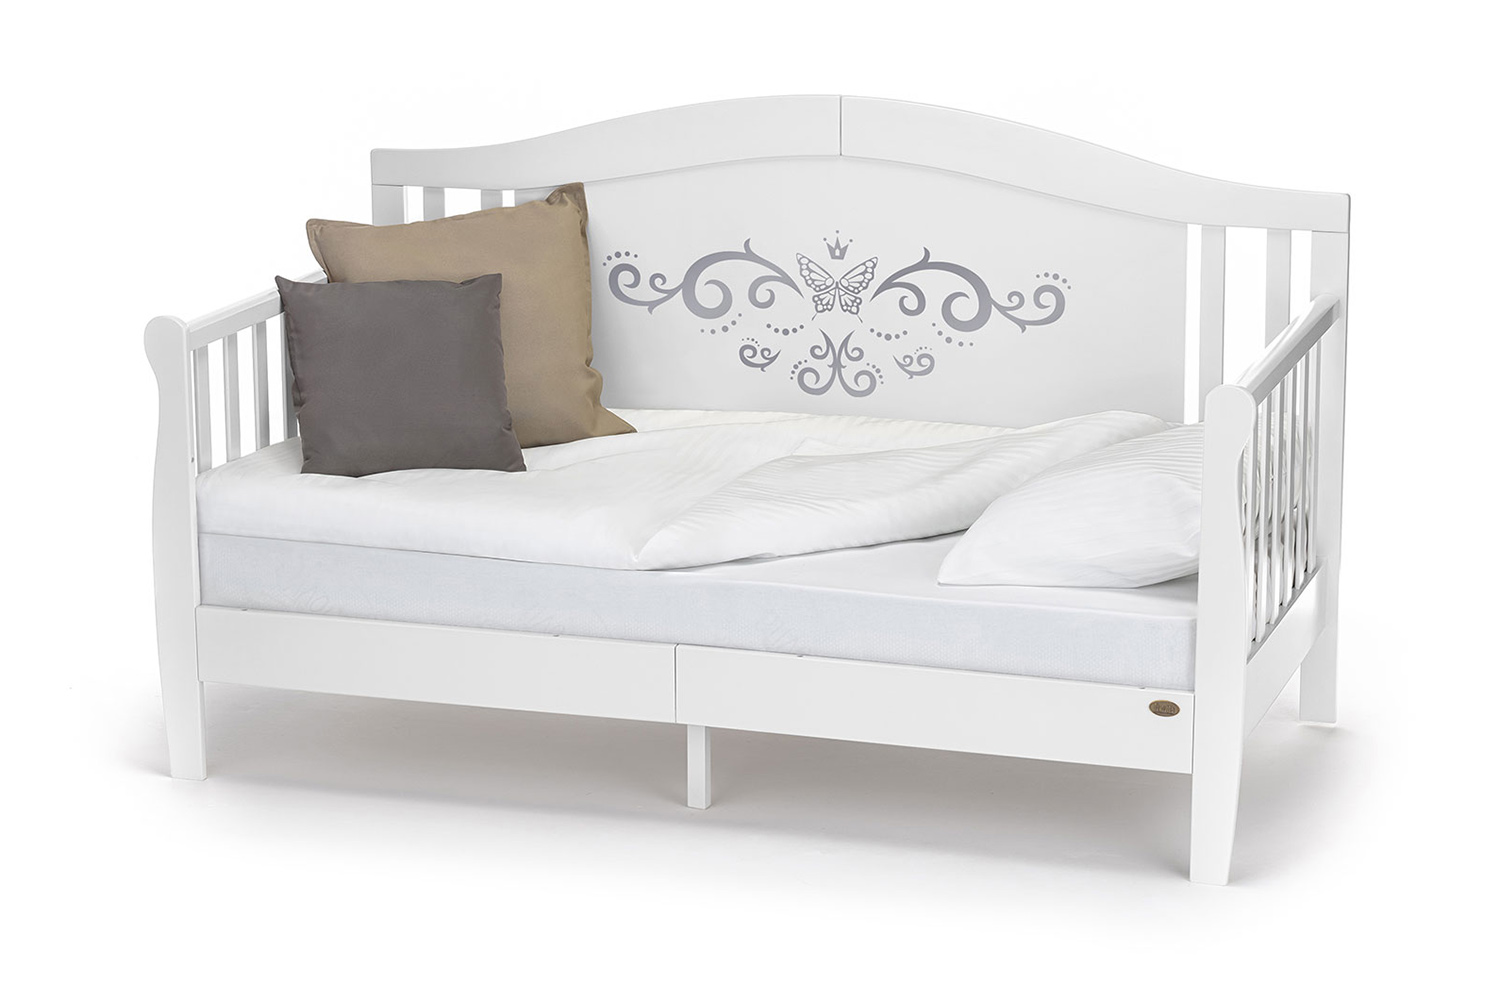 Кровать-диван детская Stanzione Verona Div Armonia